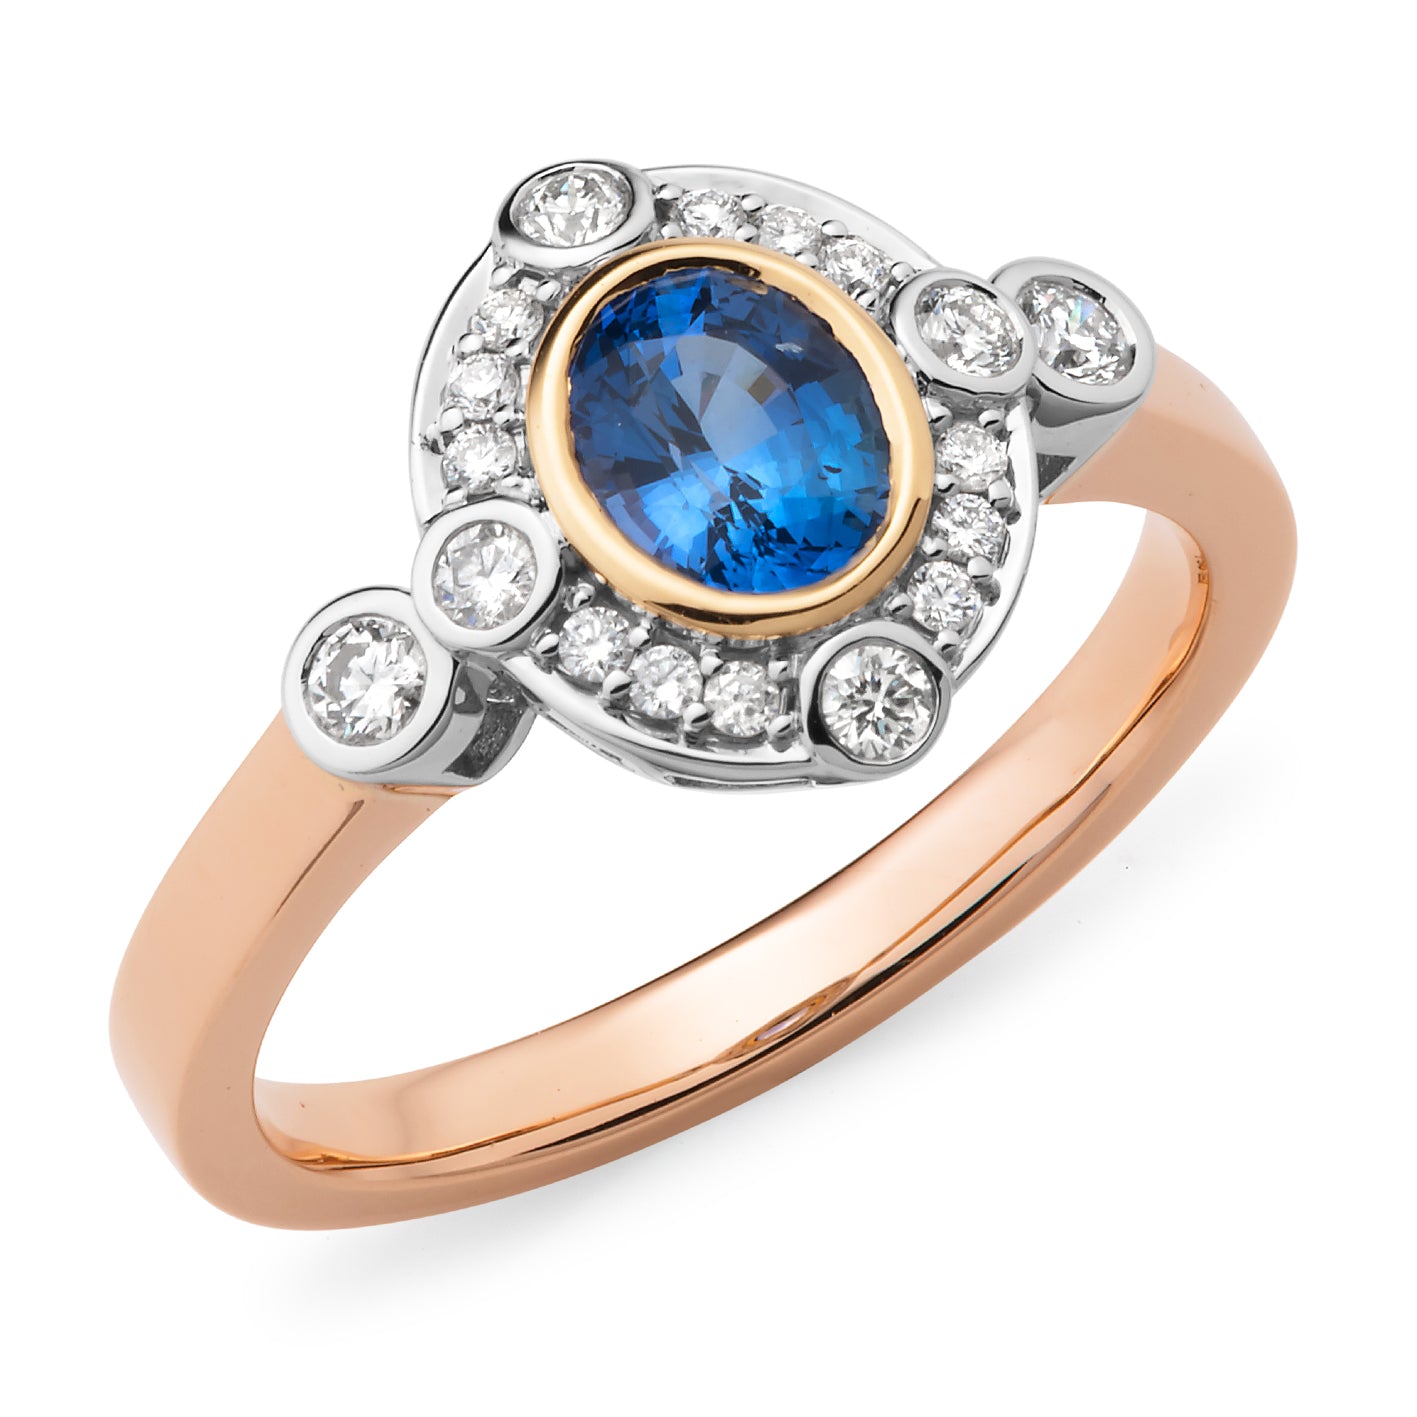 Ada' Oval Cut Ceylon Sapphire Diamond Ring in Yellow, Rose & White Gold